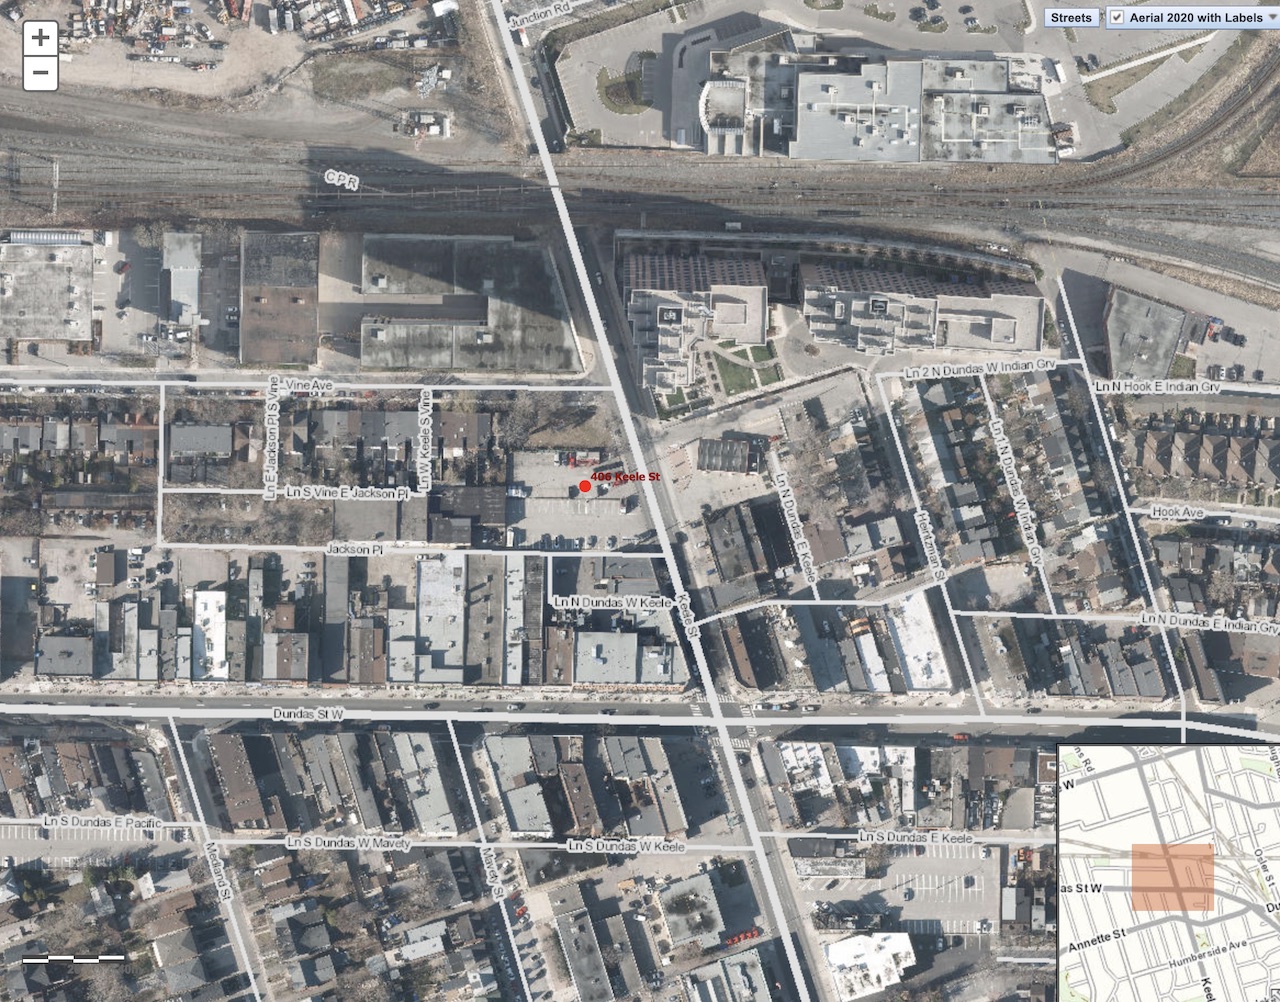 The Stockton, 406 Keele Street, Toronto, image via Toronto Maps V2